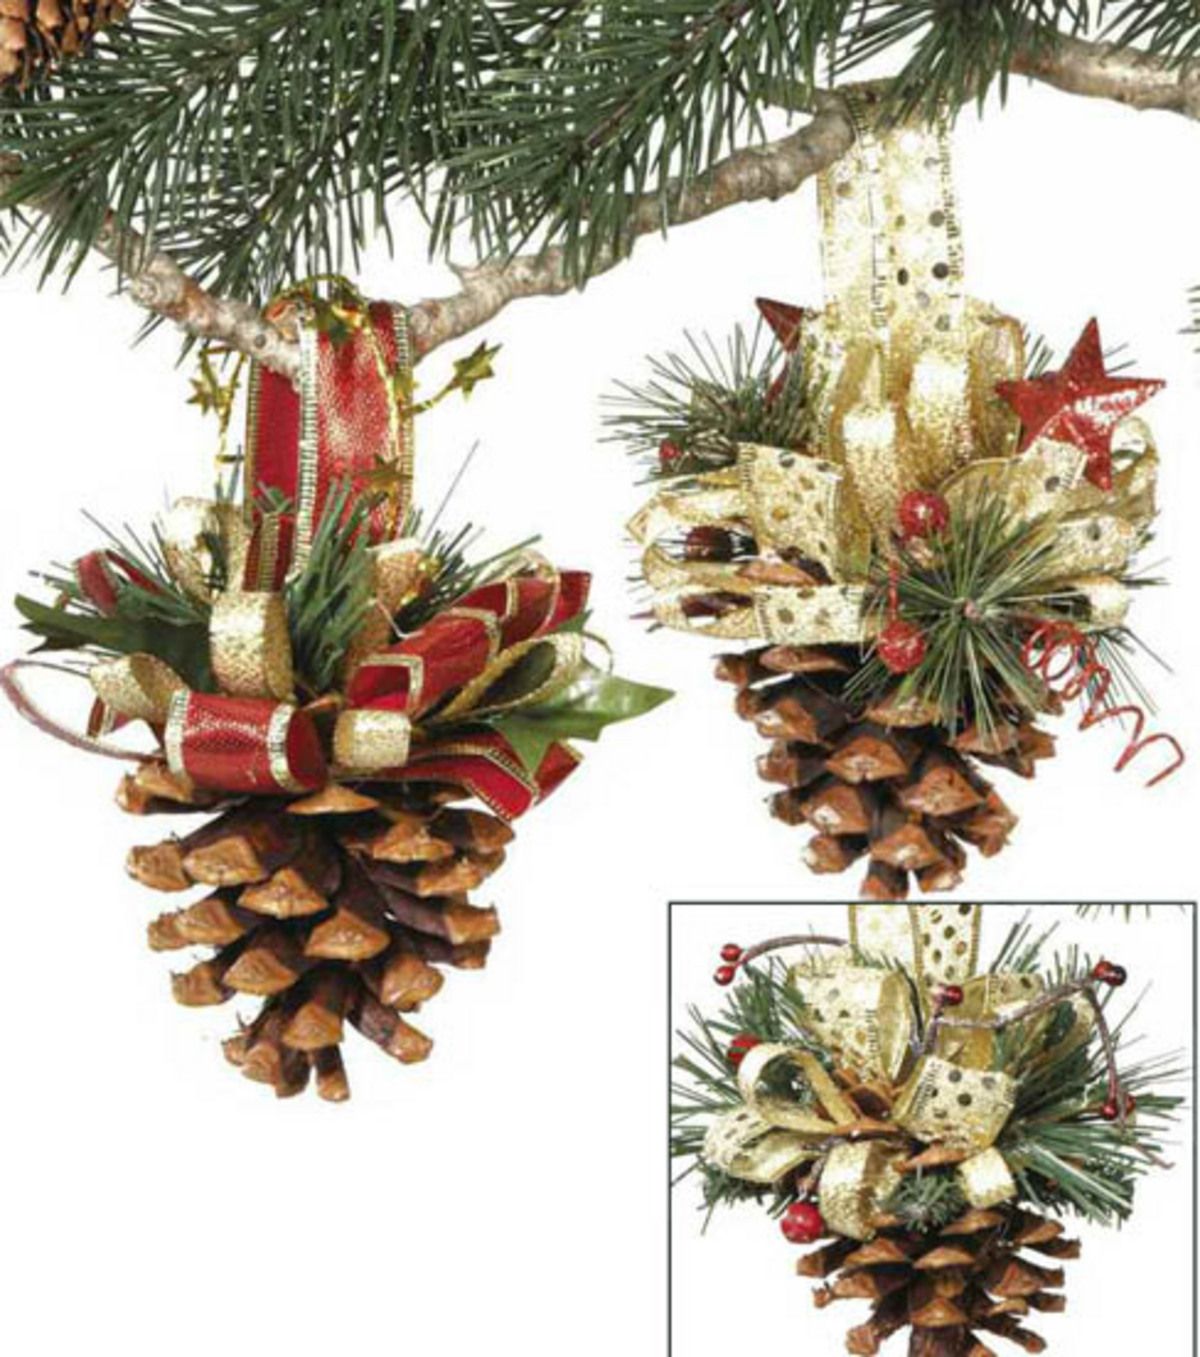 Pine Cone Ornaments for Christmas -   Pine Cone Christmas Ornament Ideas